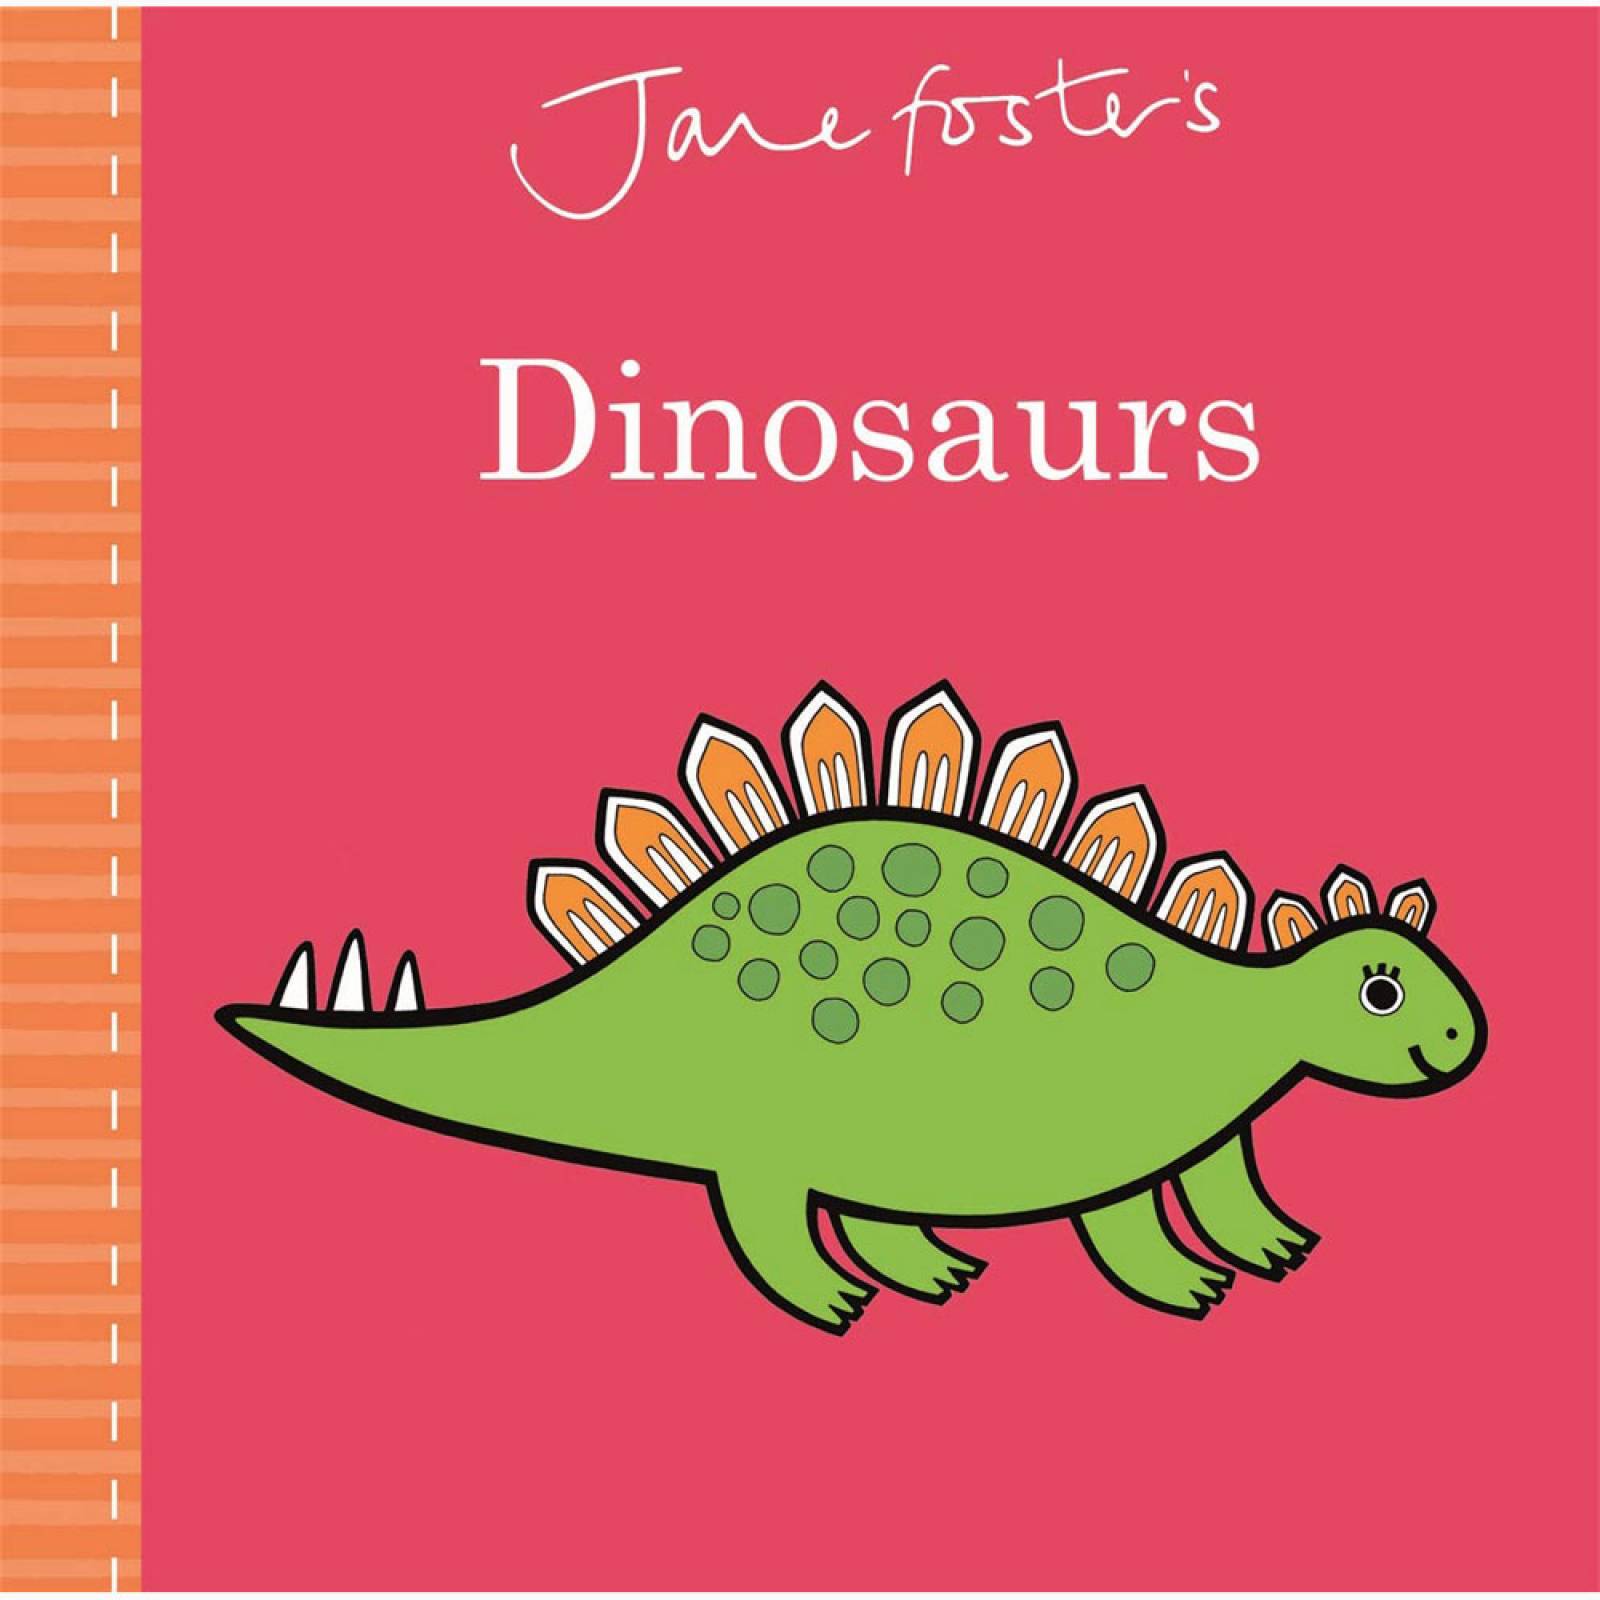 Jane Foster's Dinosaurs - Board Book